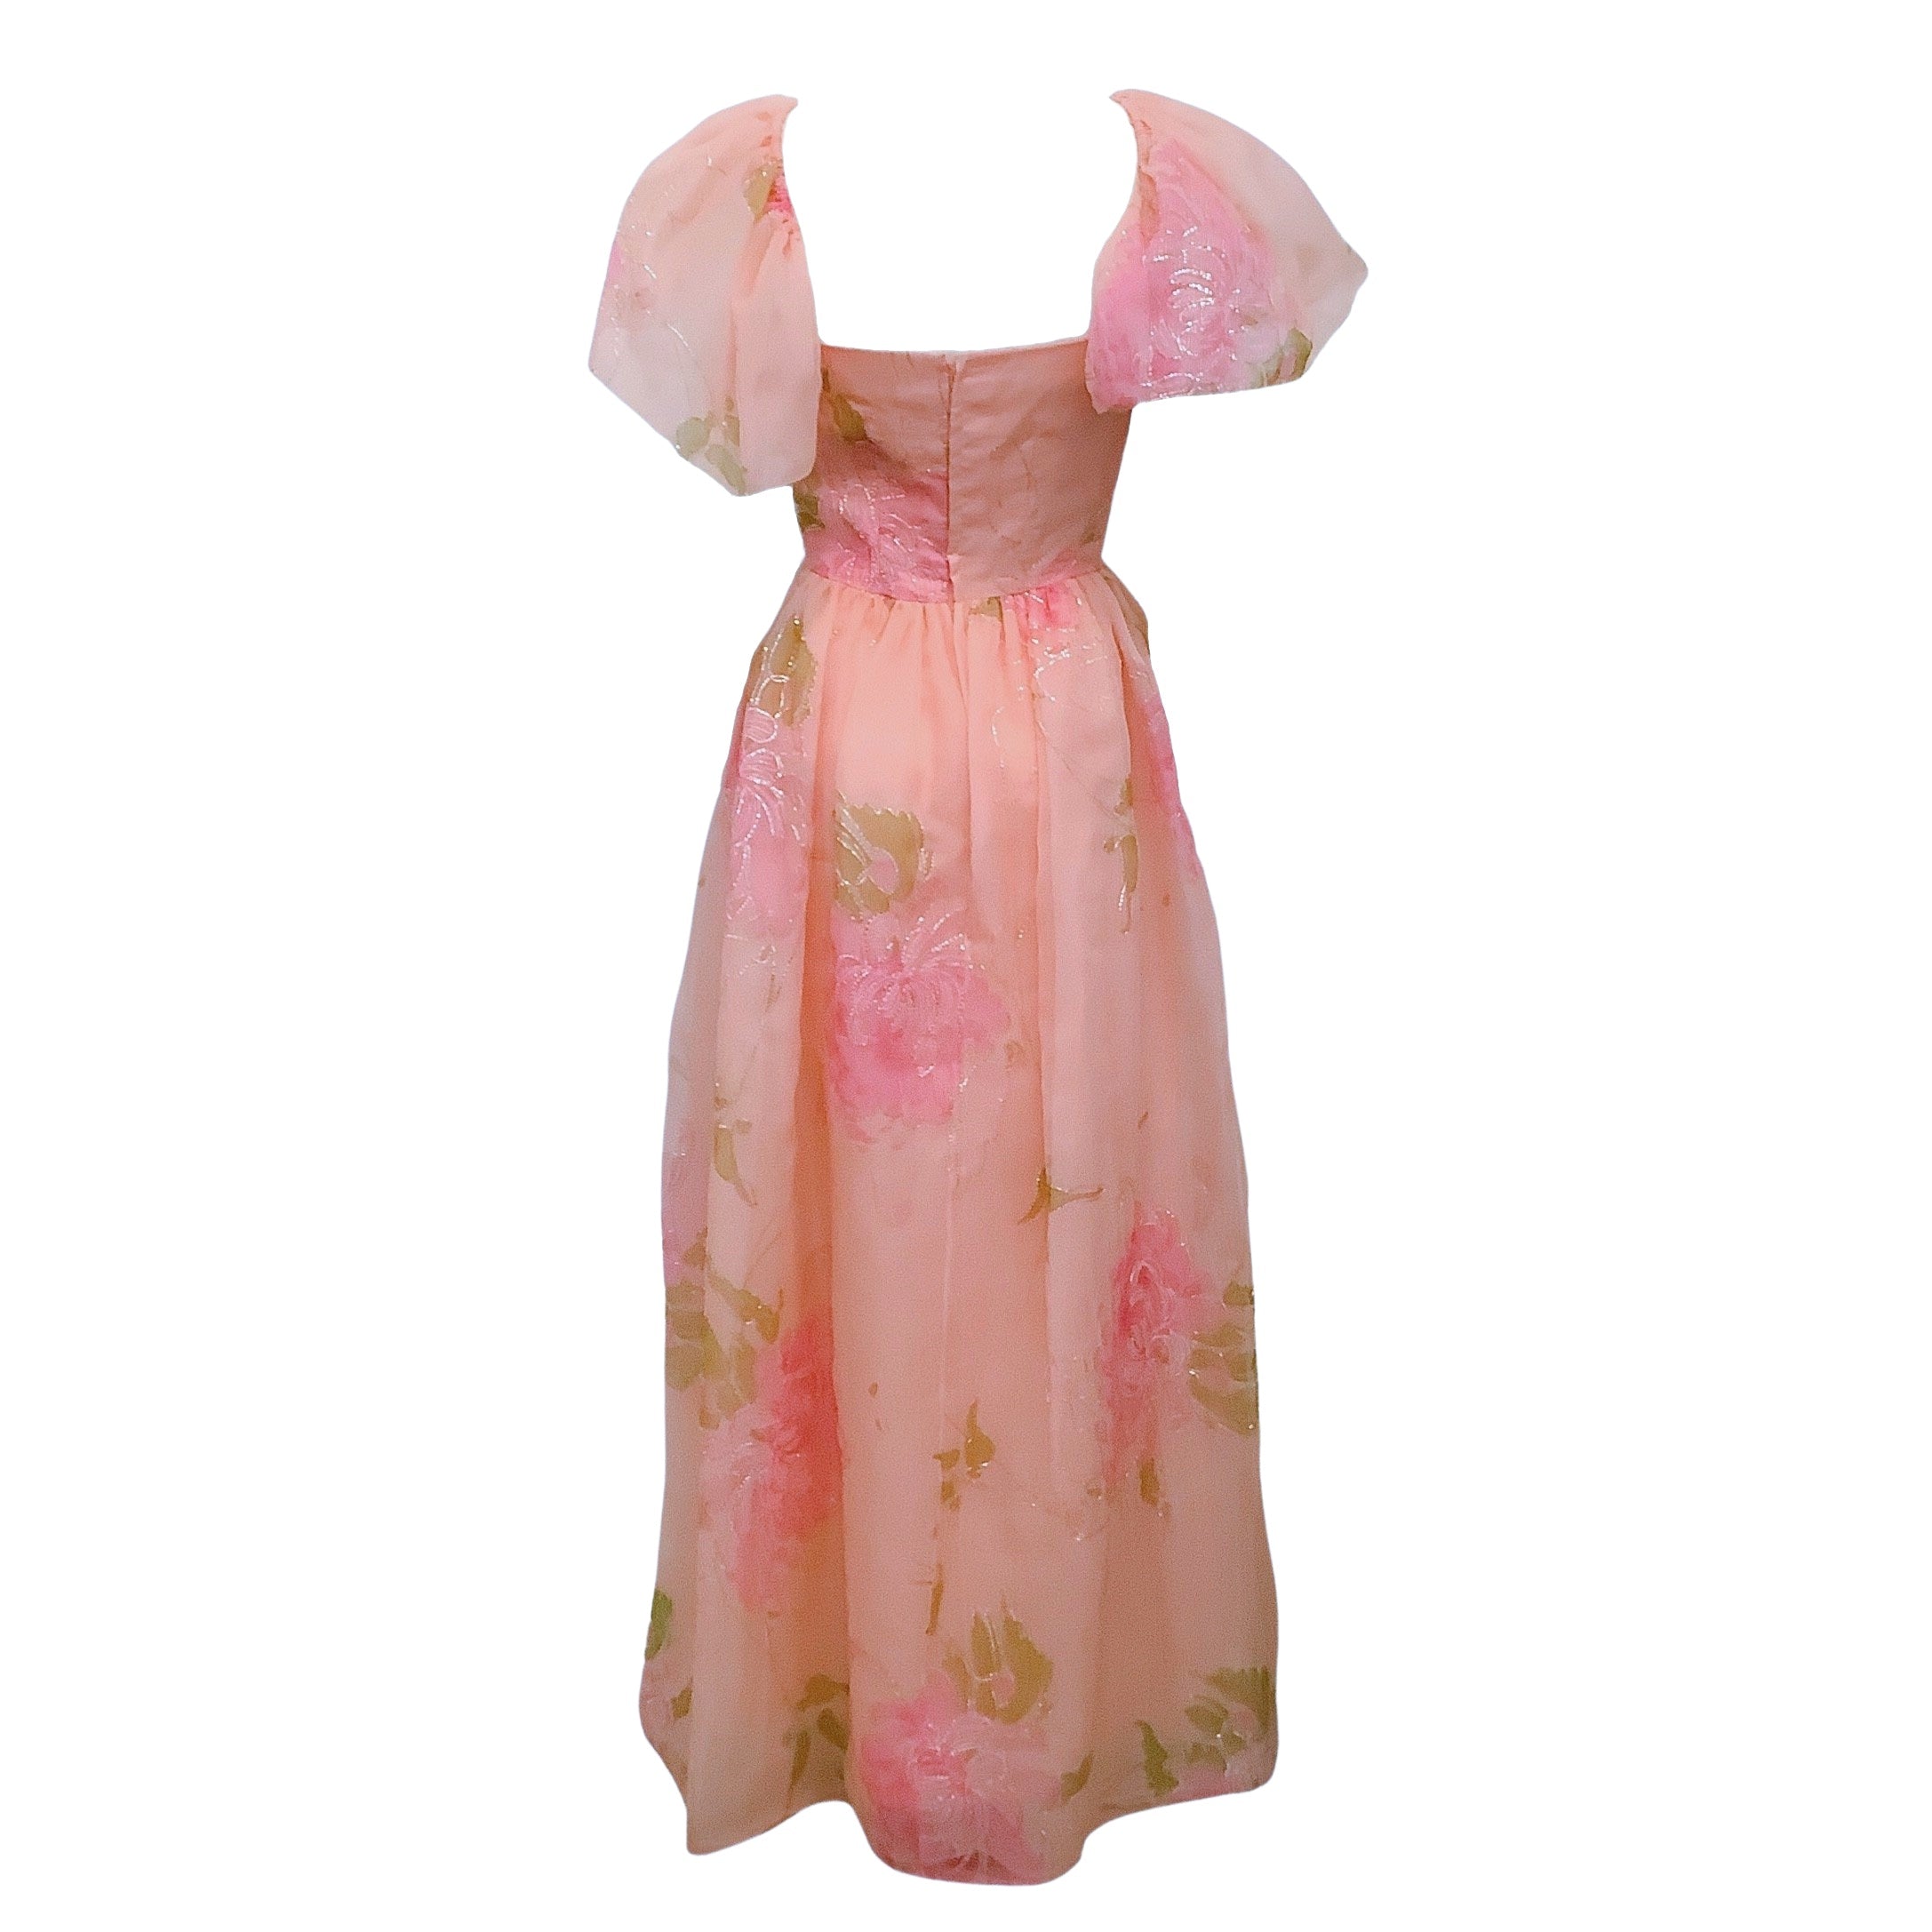 Richilene Pink Vintage Flutter Sleeve Floral Dress with Gold Stitching